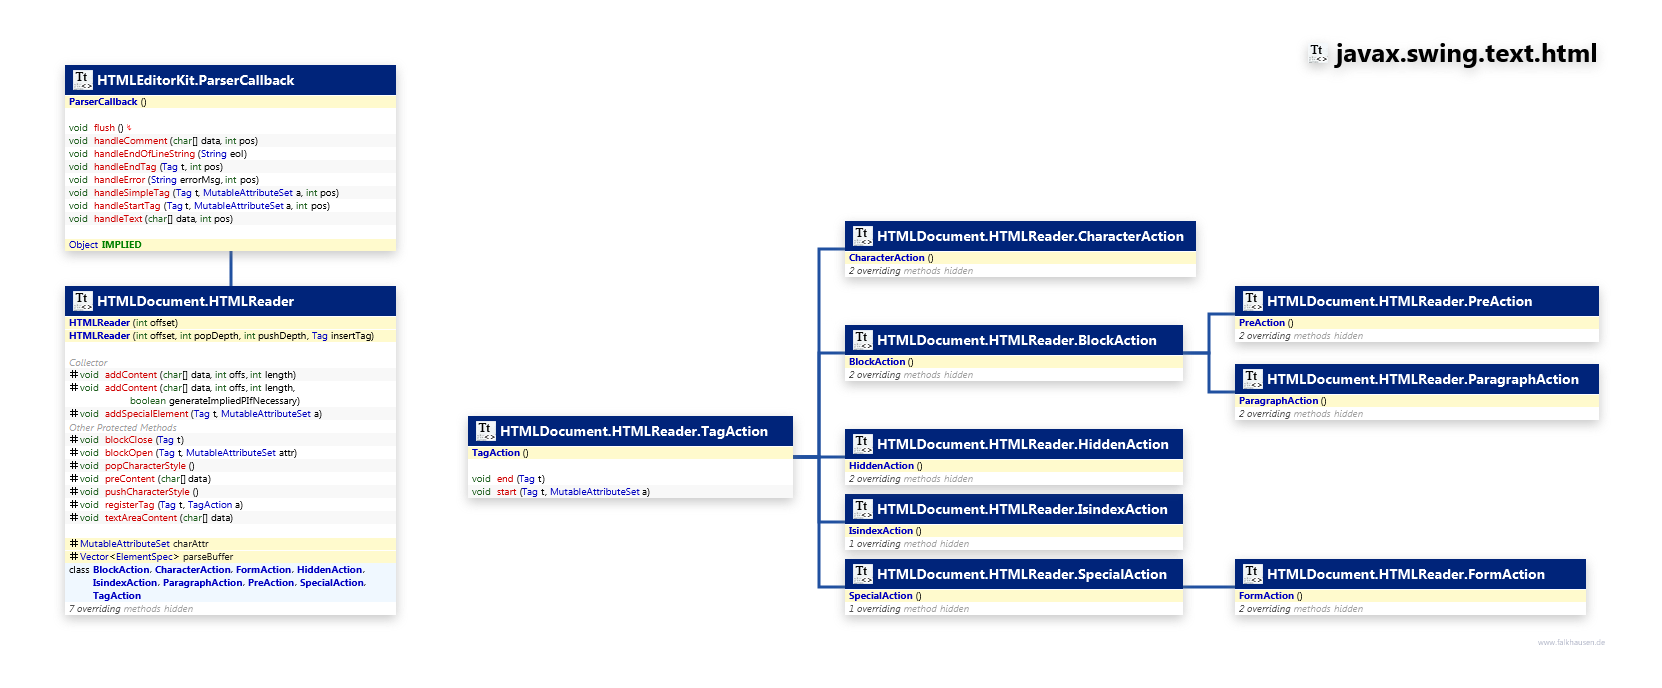 javax.swing.text.html HTMLReader class diagram and api documentation for Java 8